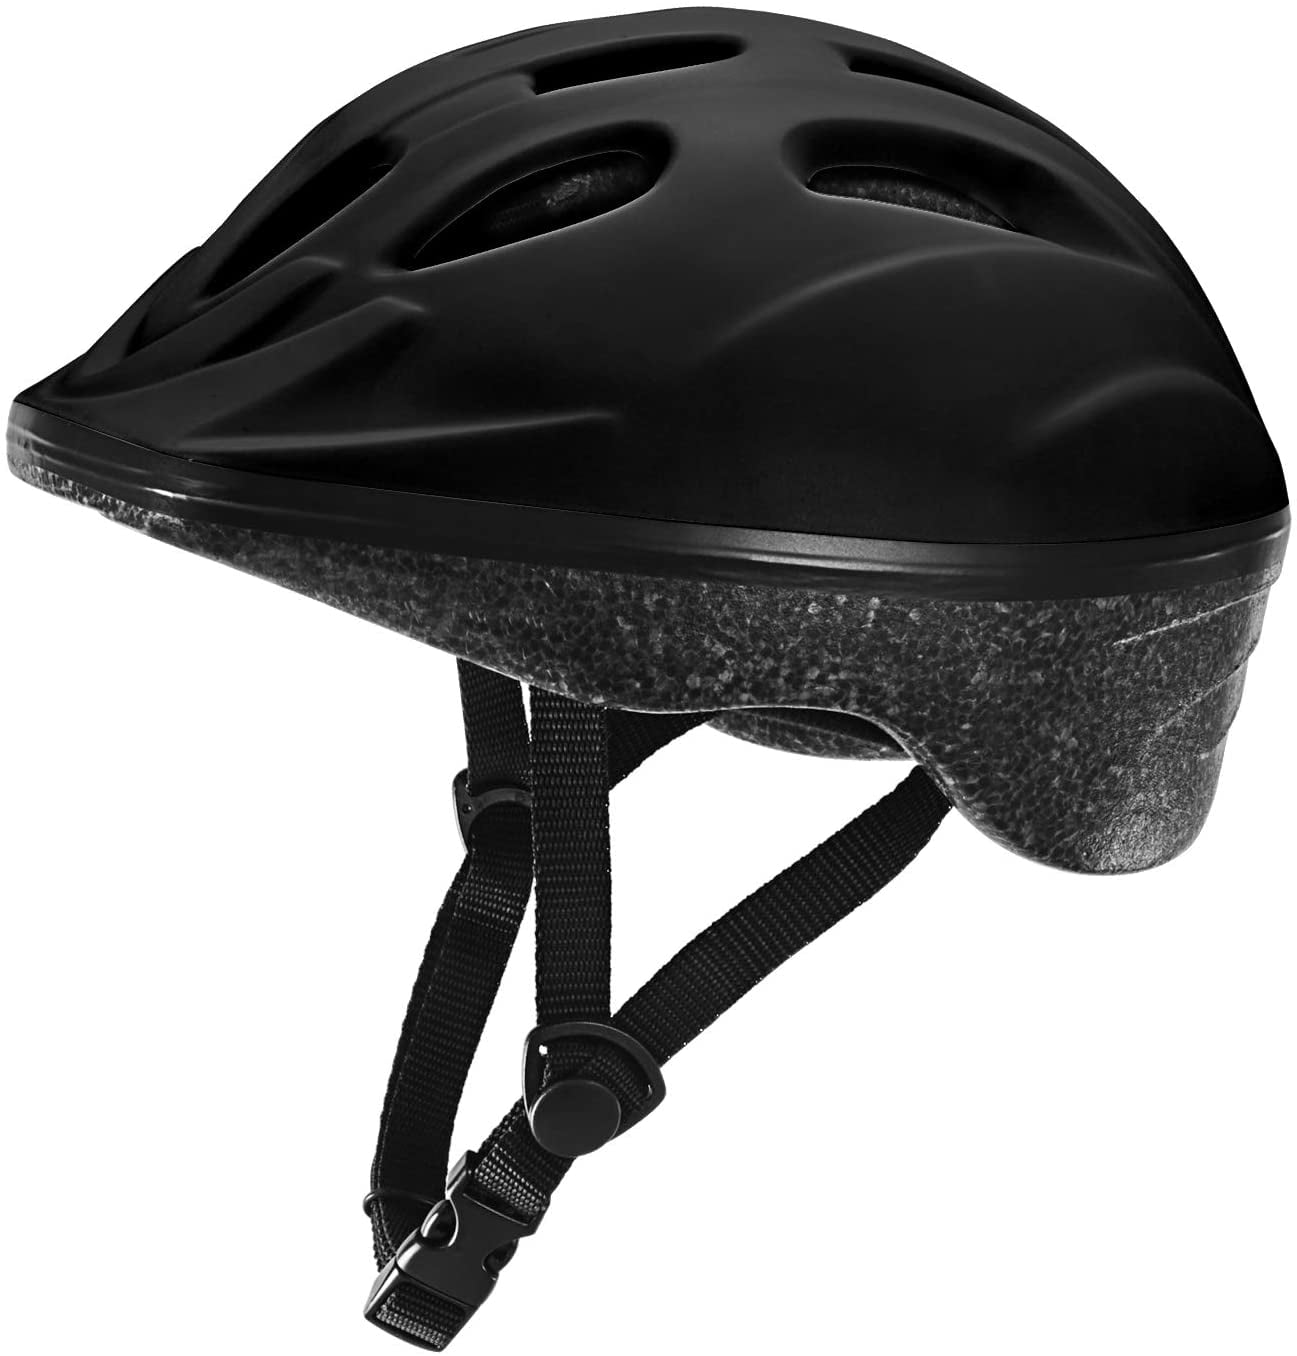 Details about   Kids Cycling Helmet Adjustable Safety Multi-sport Child Helmet For Balancing 